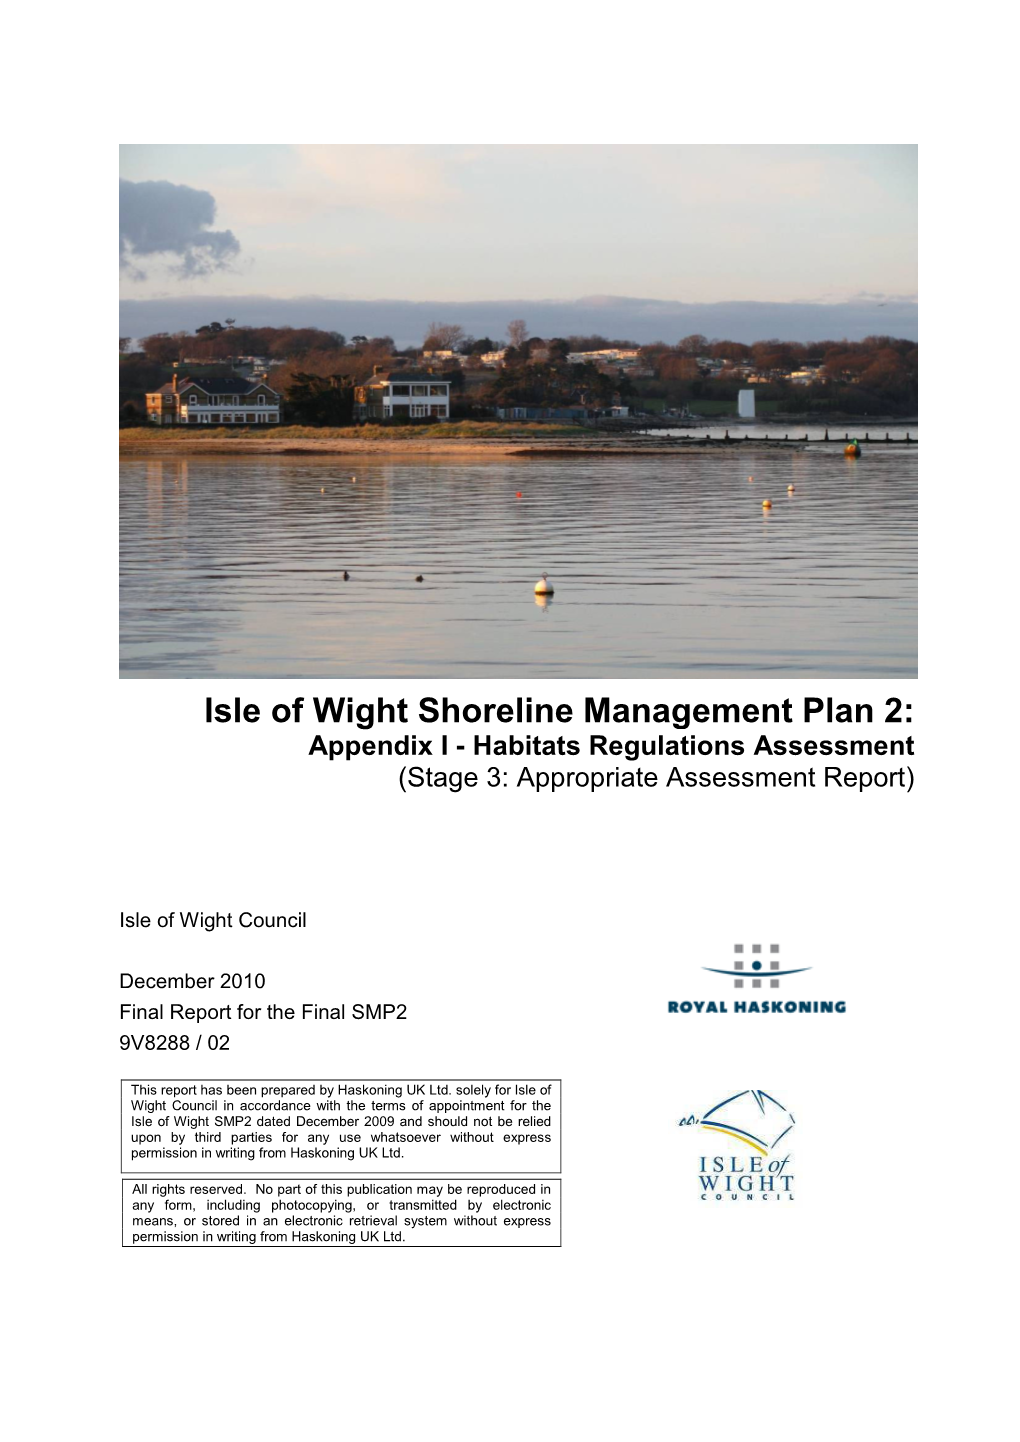 Appendix I - Habitats Regulations Assessment (Stage 3: Appropriate Assessment Report)